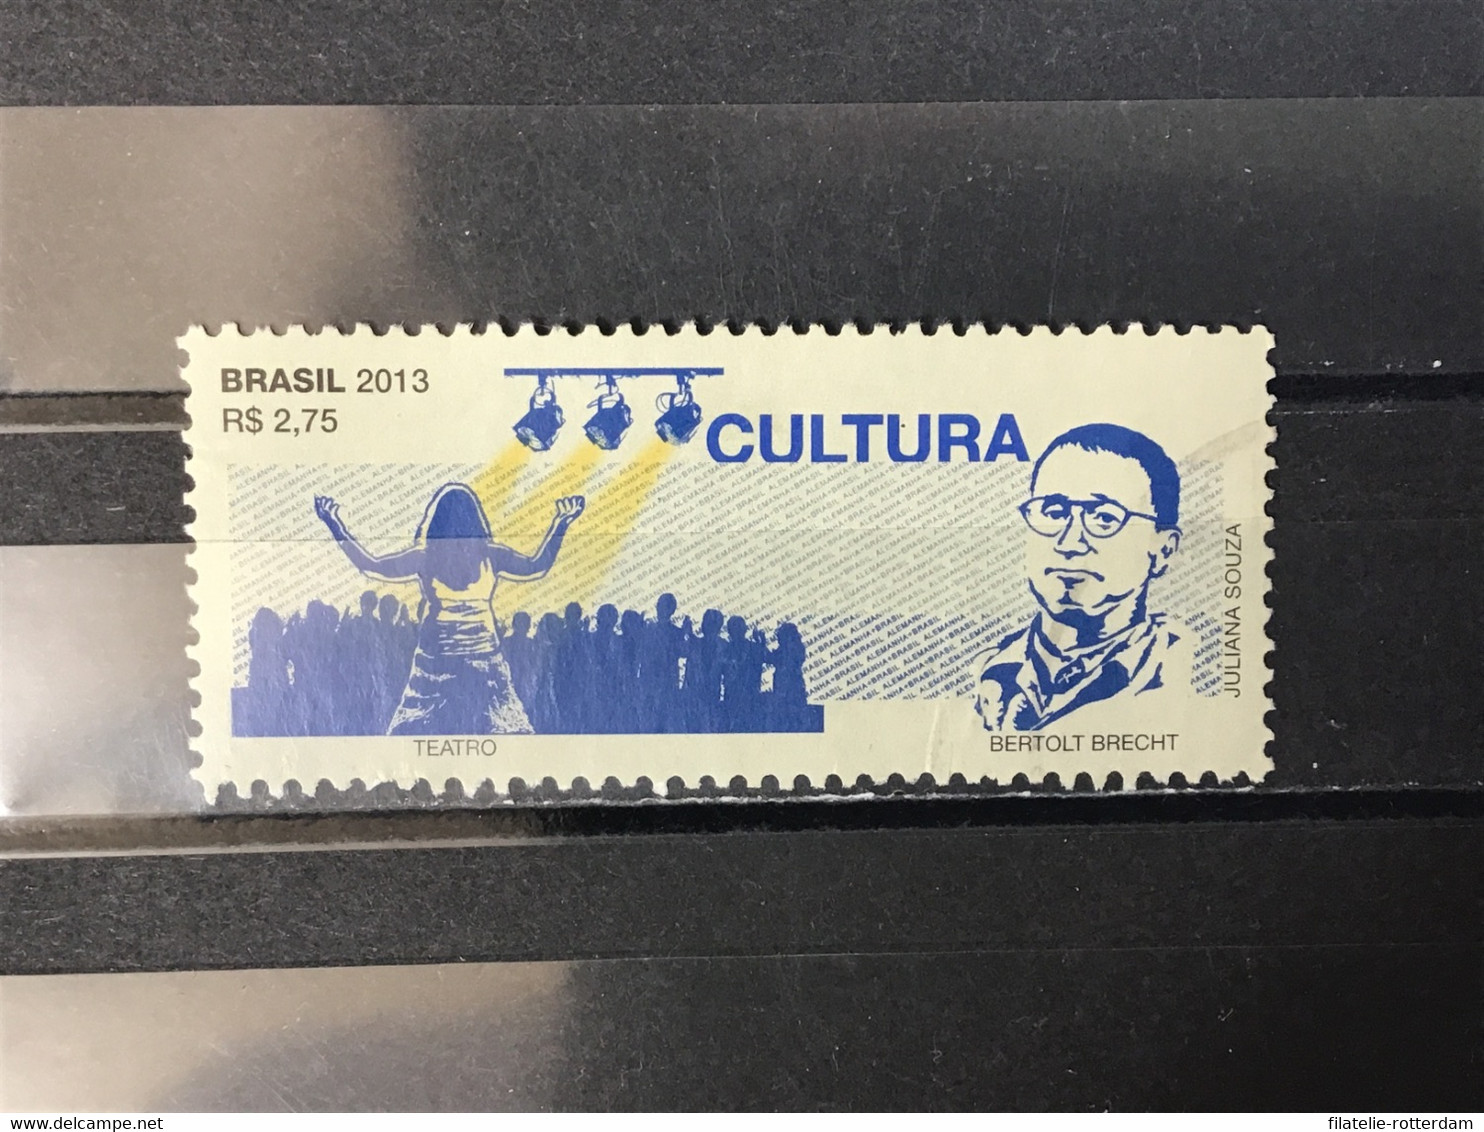 Brazilië / Brazil - Relatie Met Duitsland (2.75) 2013 - Used Stamps